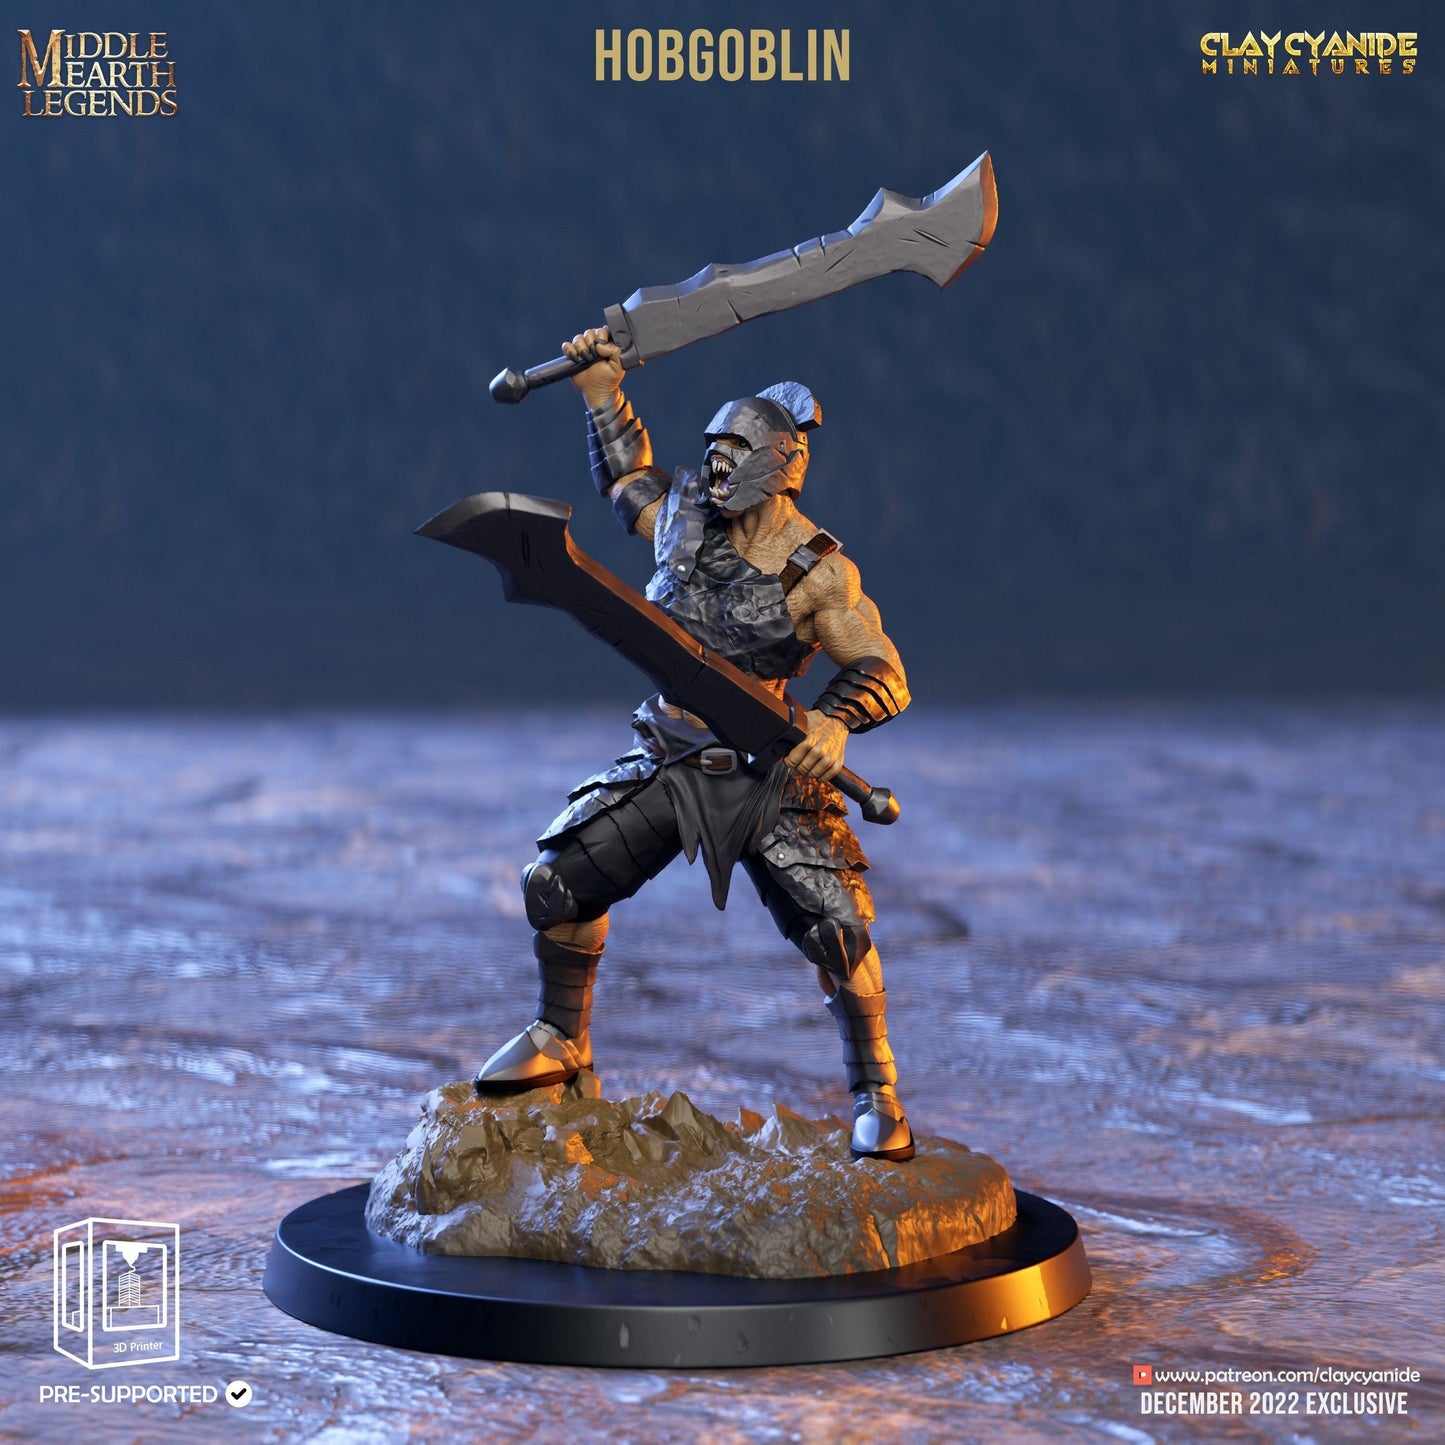 Hobgoblin Miniature: A Fearsome Goblin Figurine for Fantasy Adventures | 32mm Scale - Plague Miniatures shop for DnD Miniatures